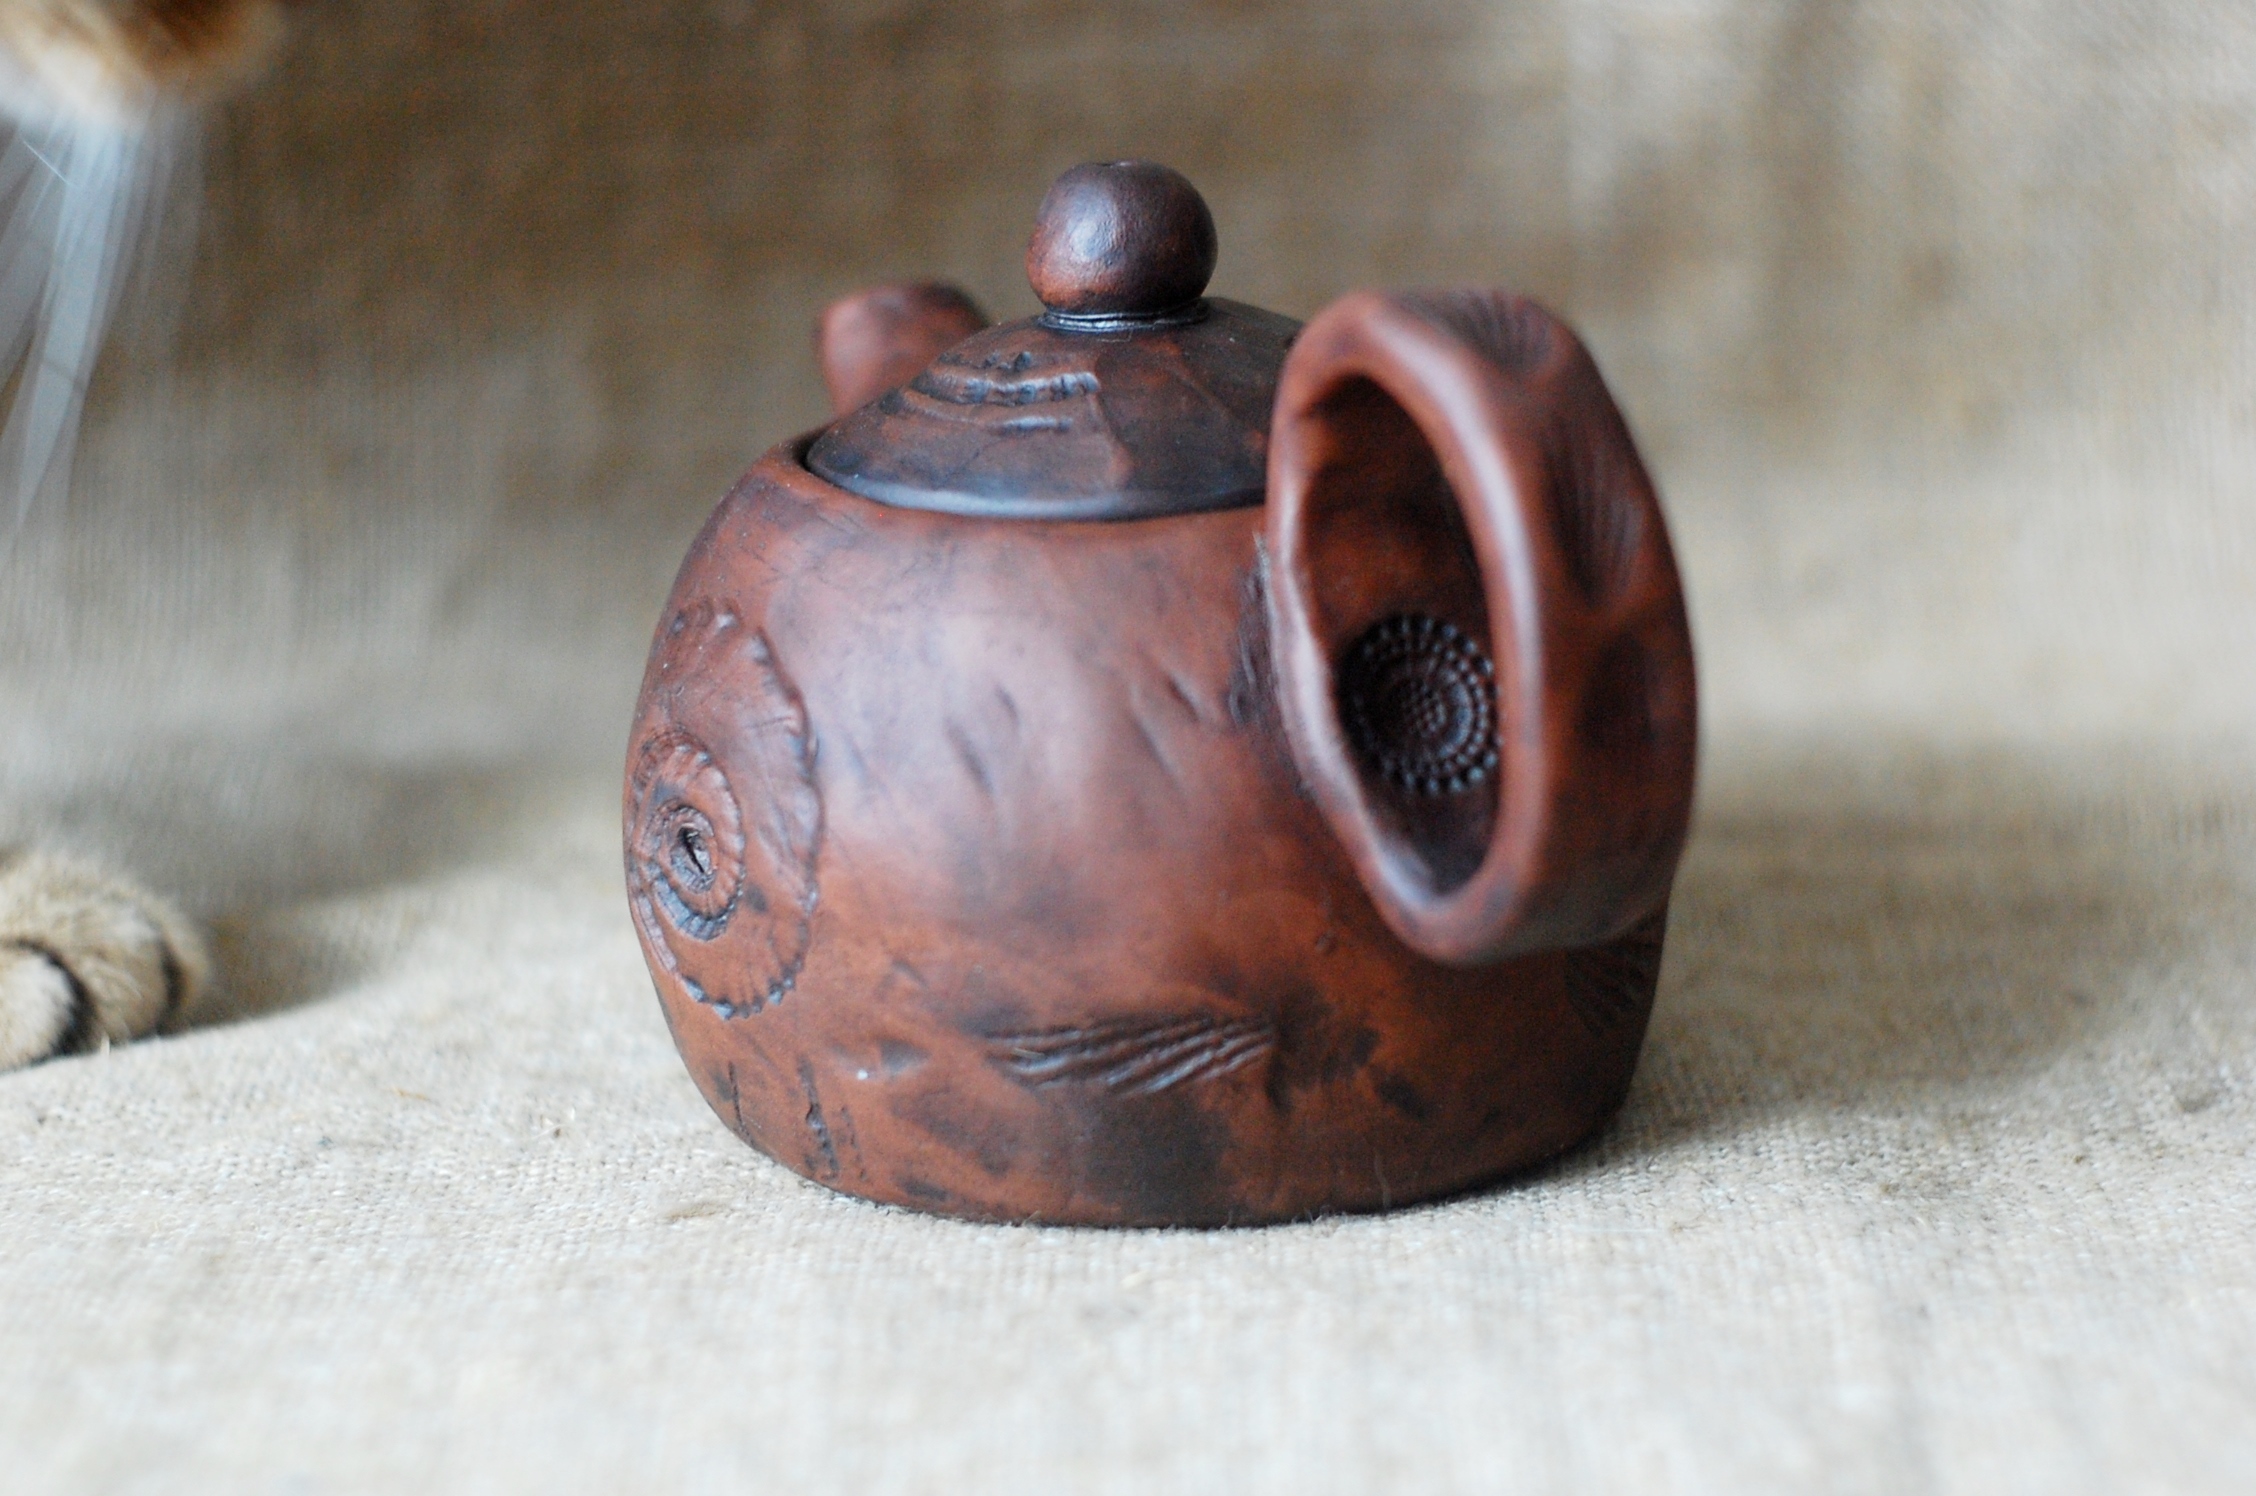 Pottery tea brewing pot or teapot for tea ceremony "Sea"